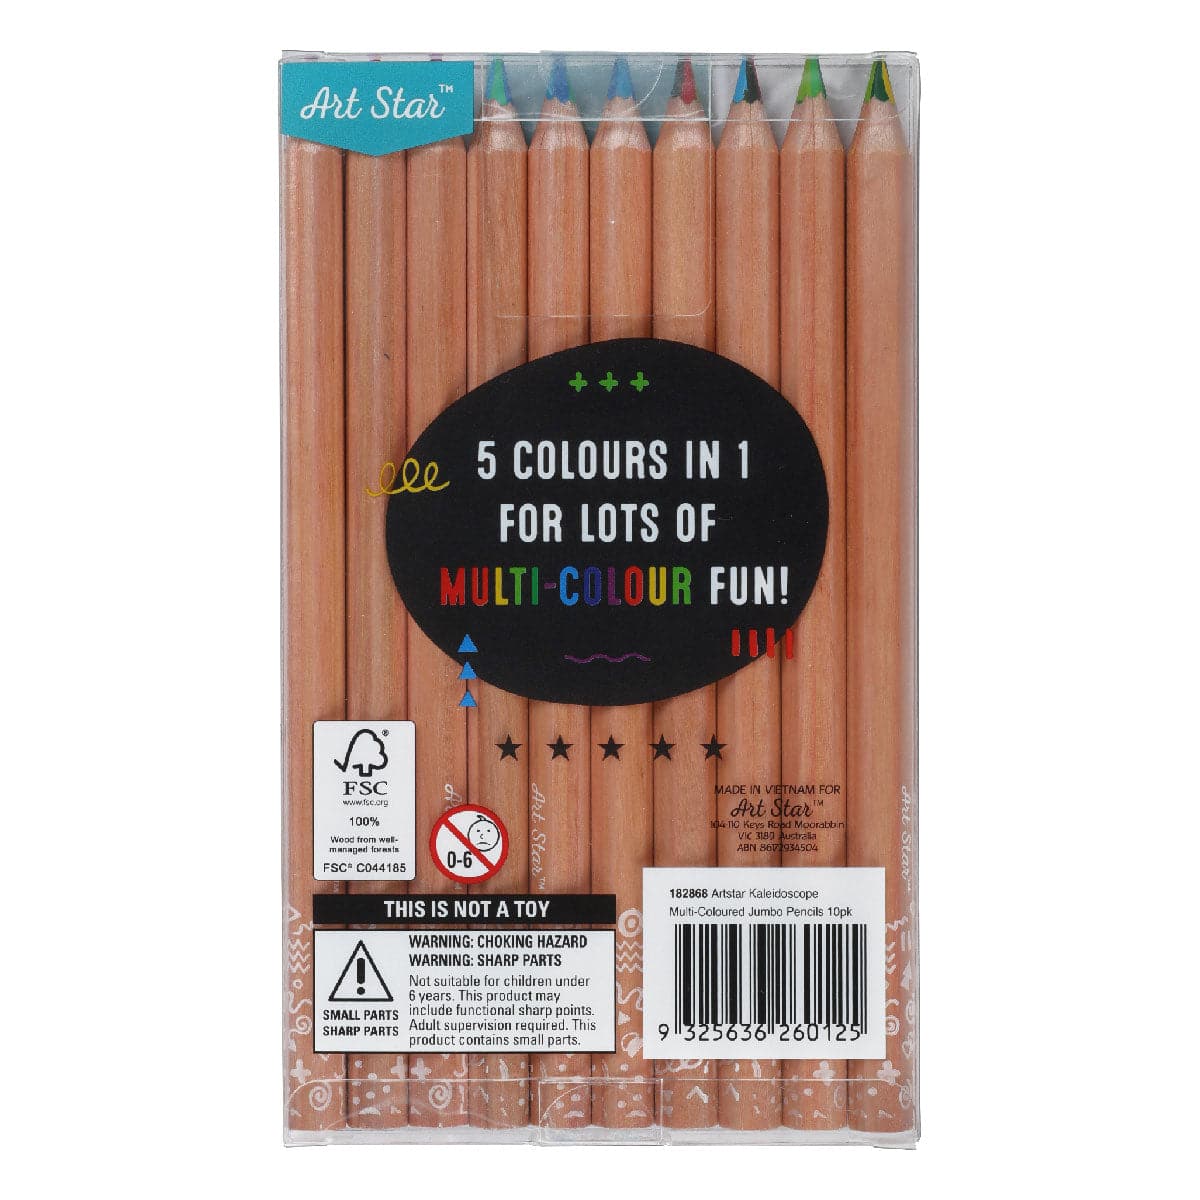 The most recent Art Star Rainbow Multi Coloured Jumbo Pencils (10